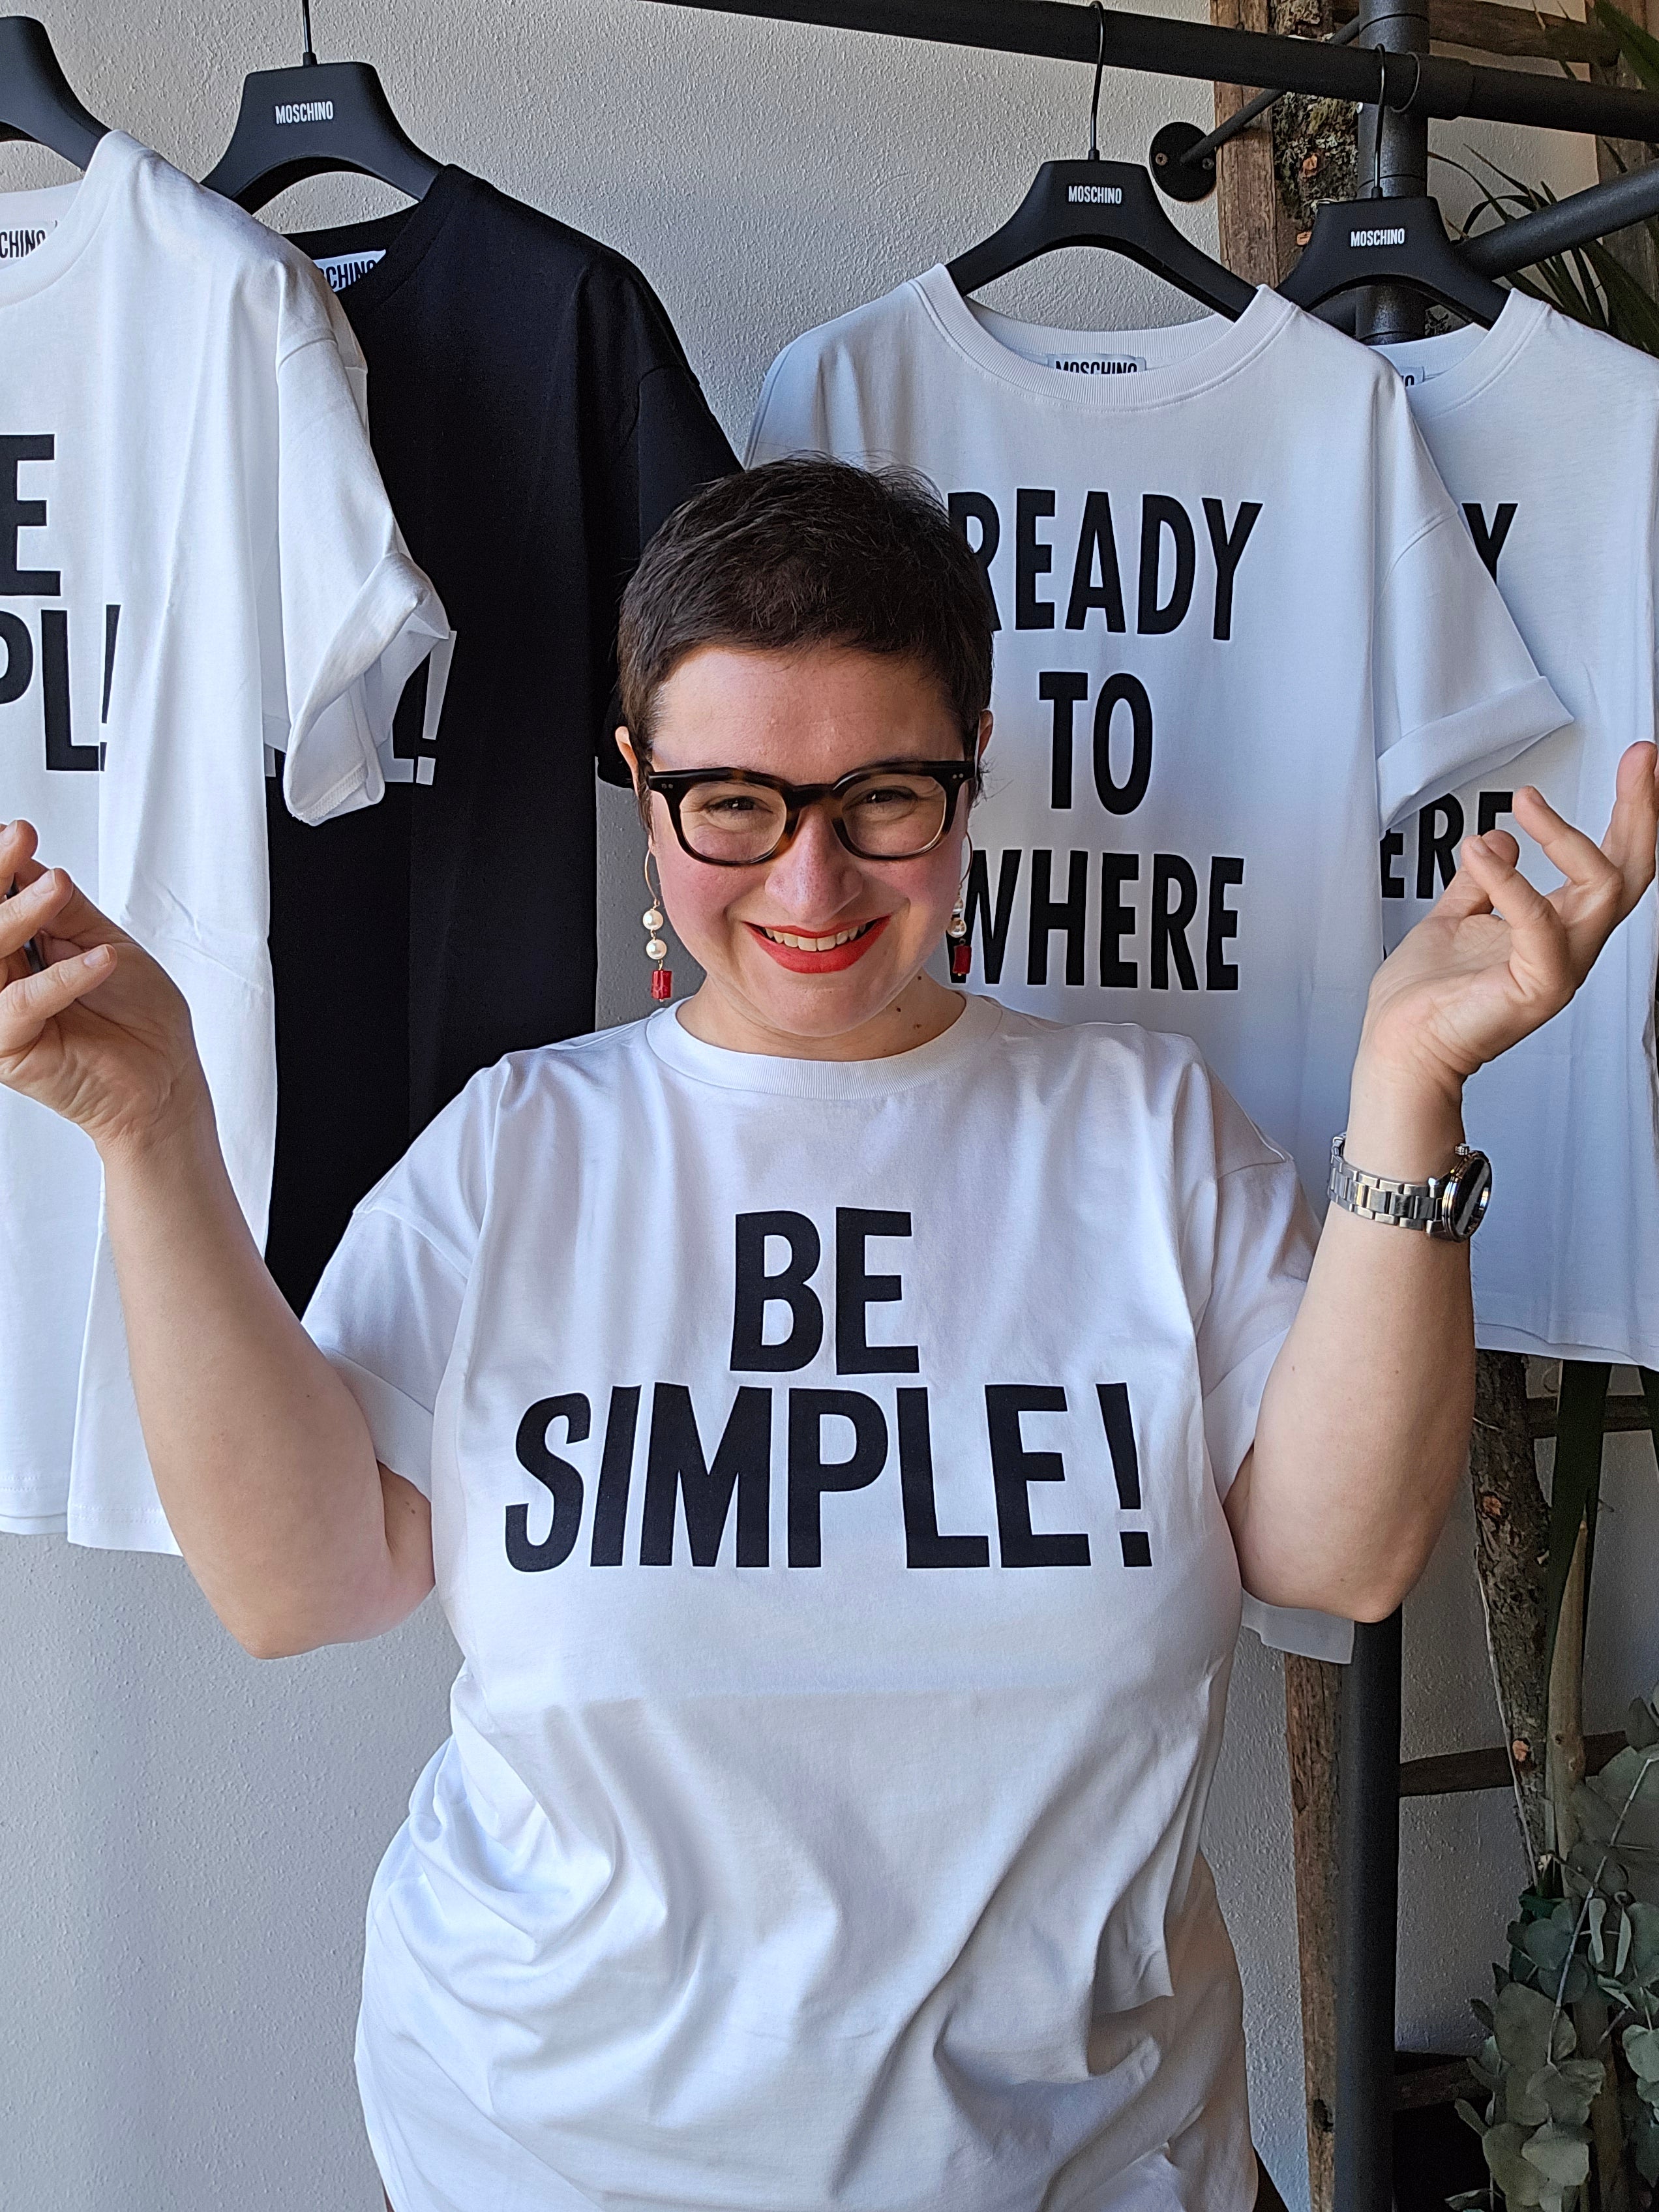 Moschino - T-shirt bianca "Be Simple" bianca